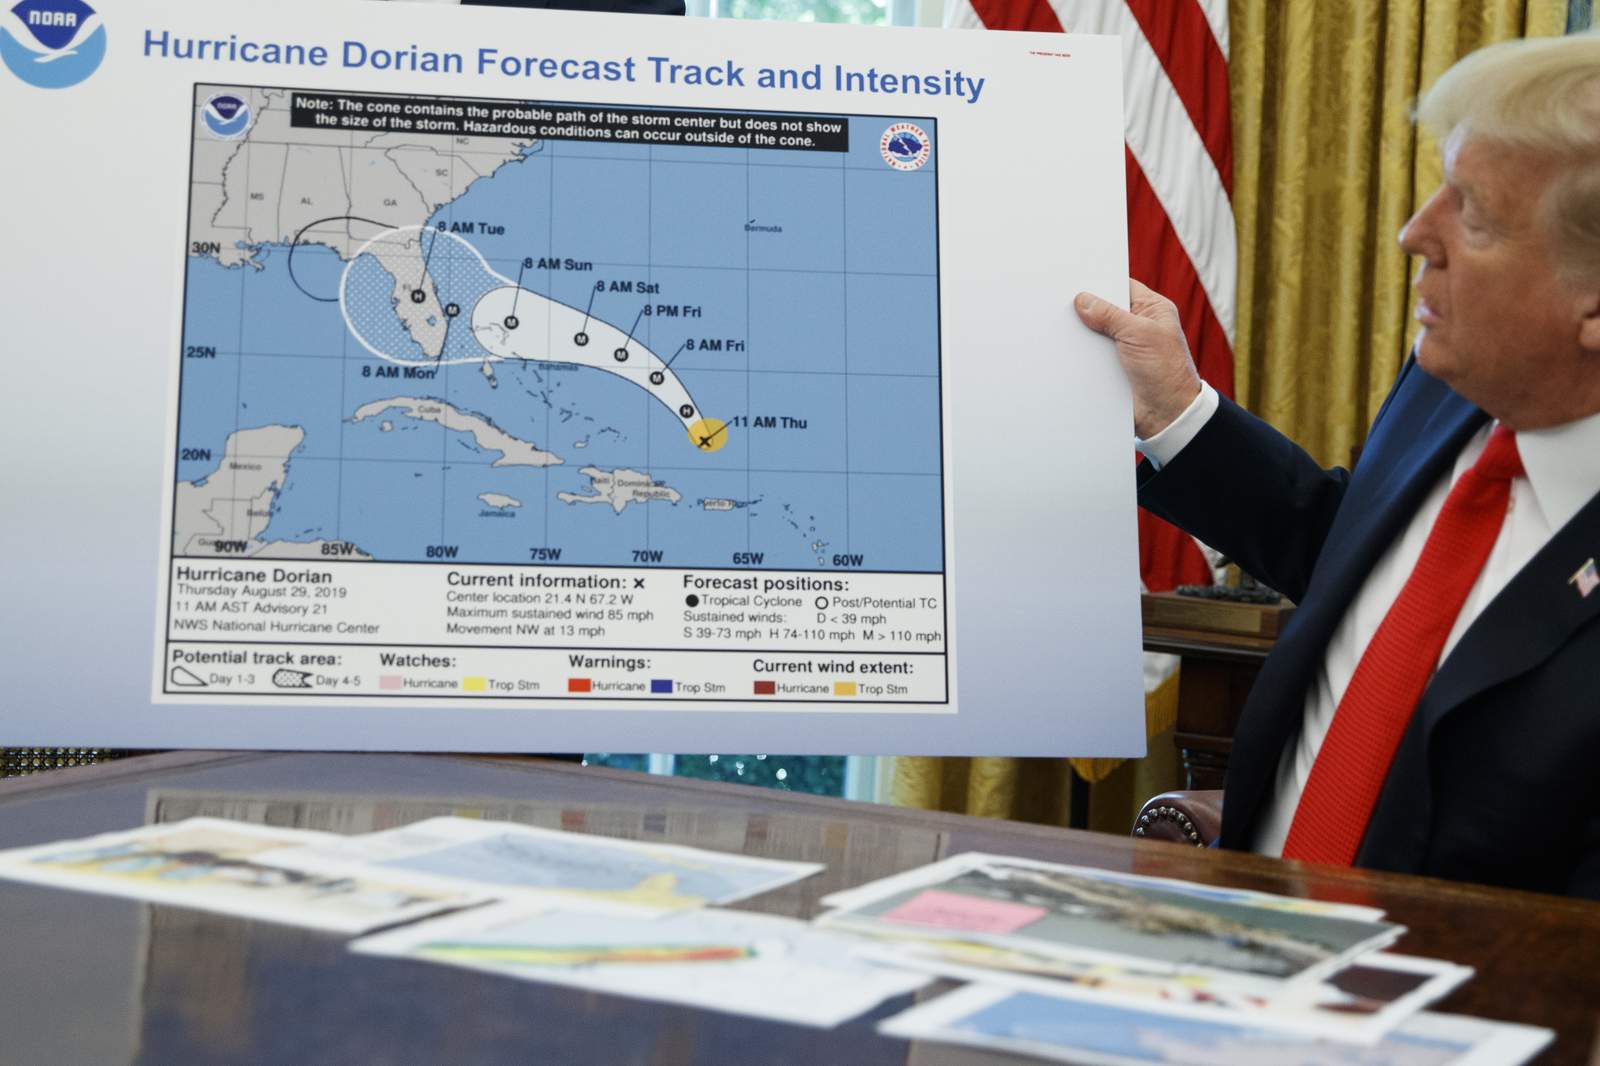 Watchdog says govt blocking report on Trump-hurricane flap